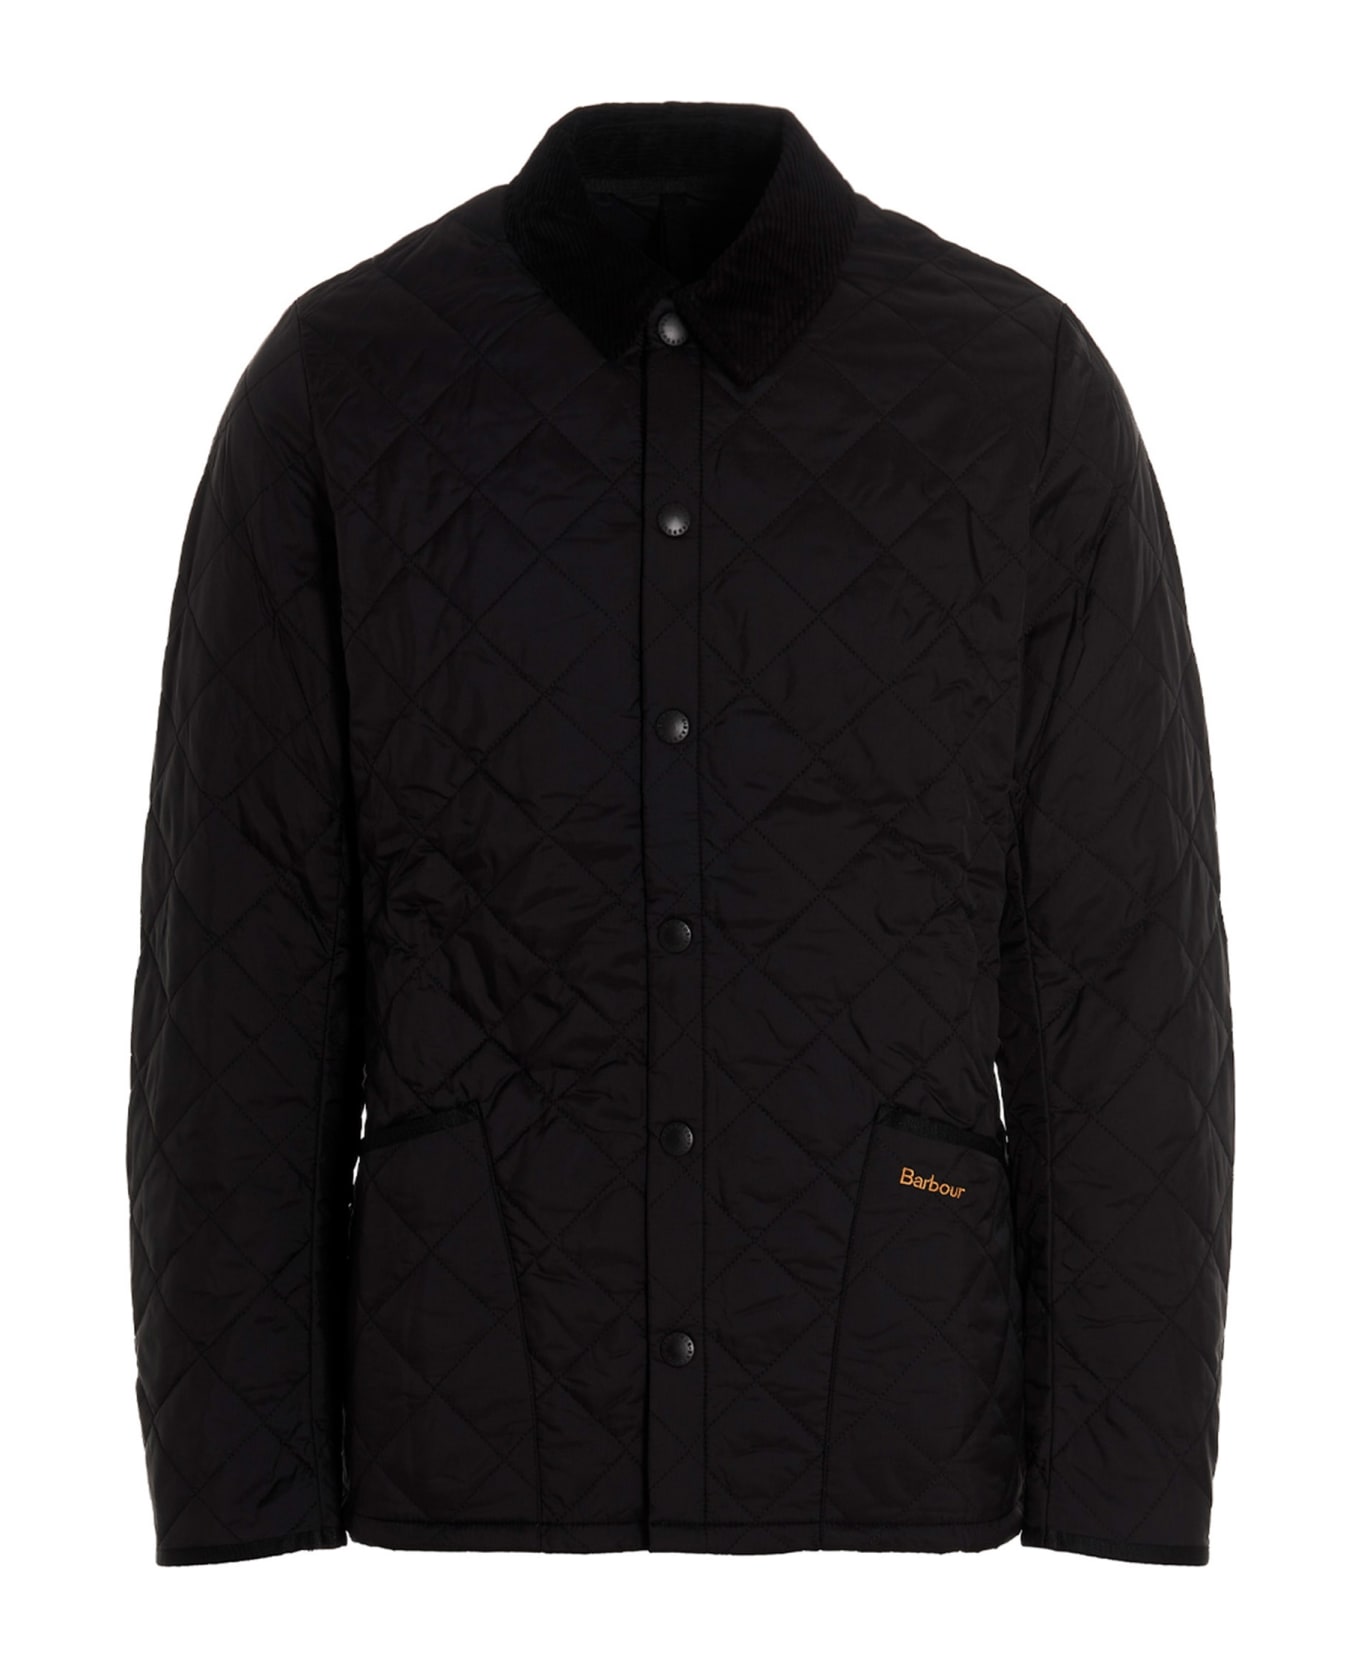 Barbour 'heritage Liddesdale' Jacket - Black  